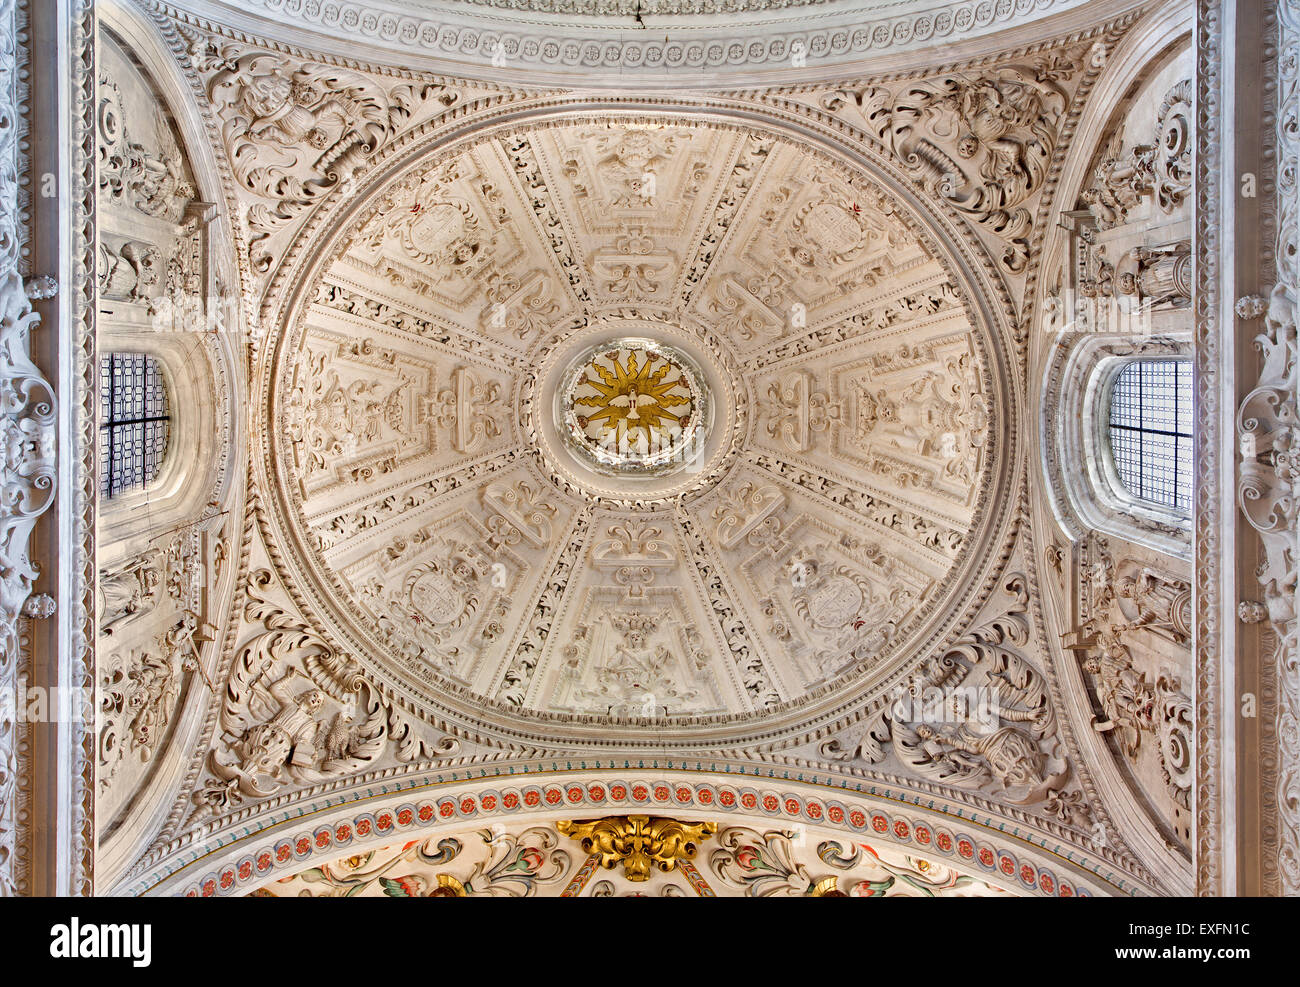 GRANADA, SPAIN - MAY 31, 2015: The cupola in church Monasterio de la Cartuja. Stock Photo